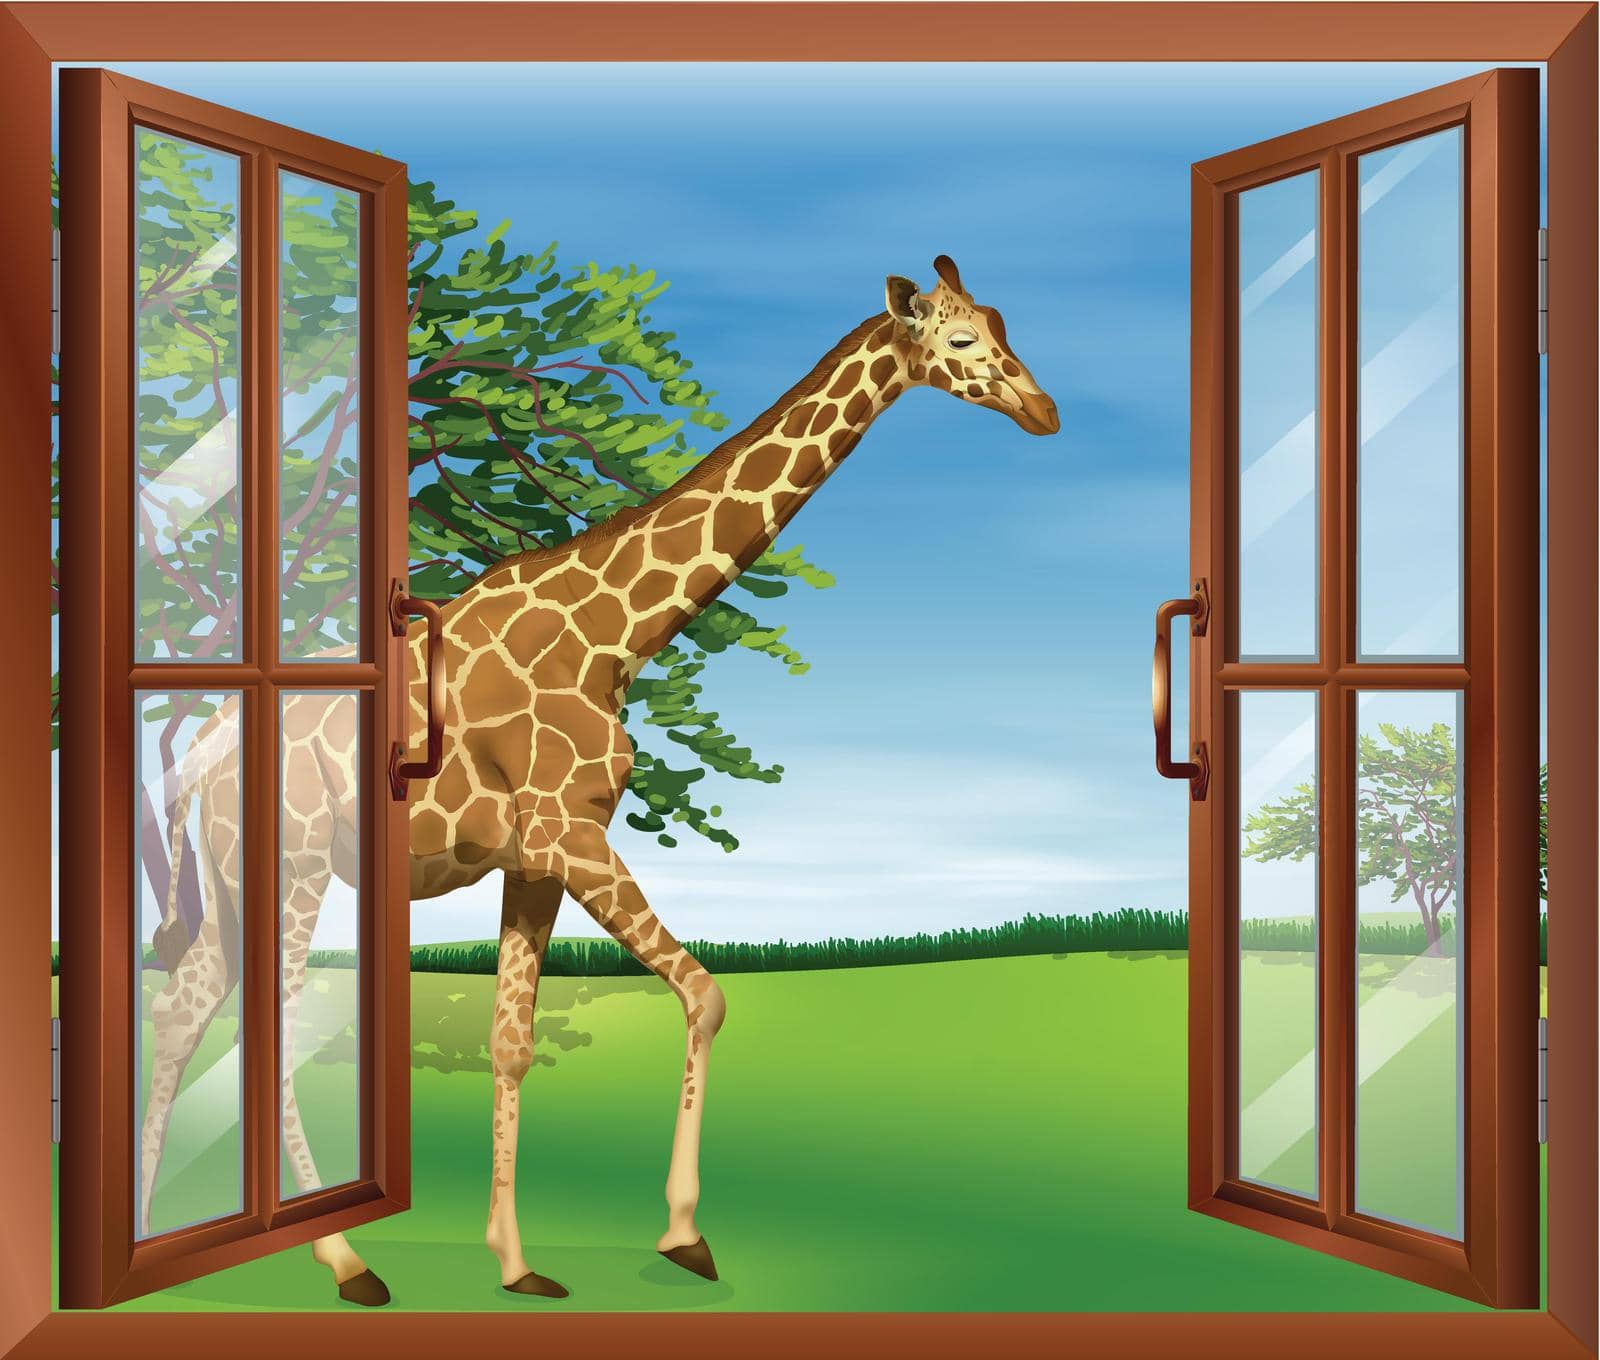 Illustration of a giraffe outside the window